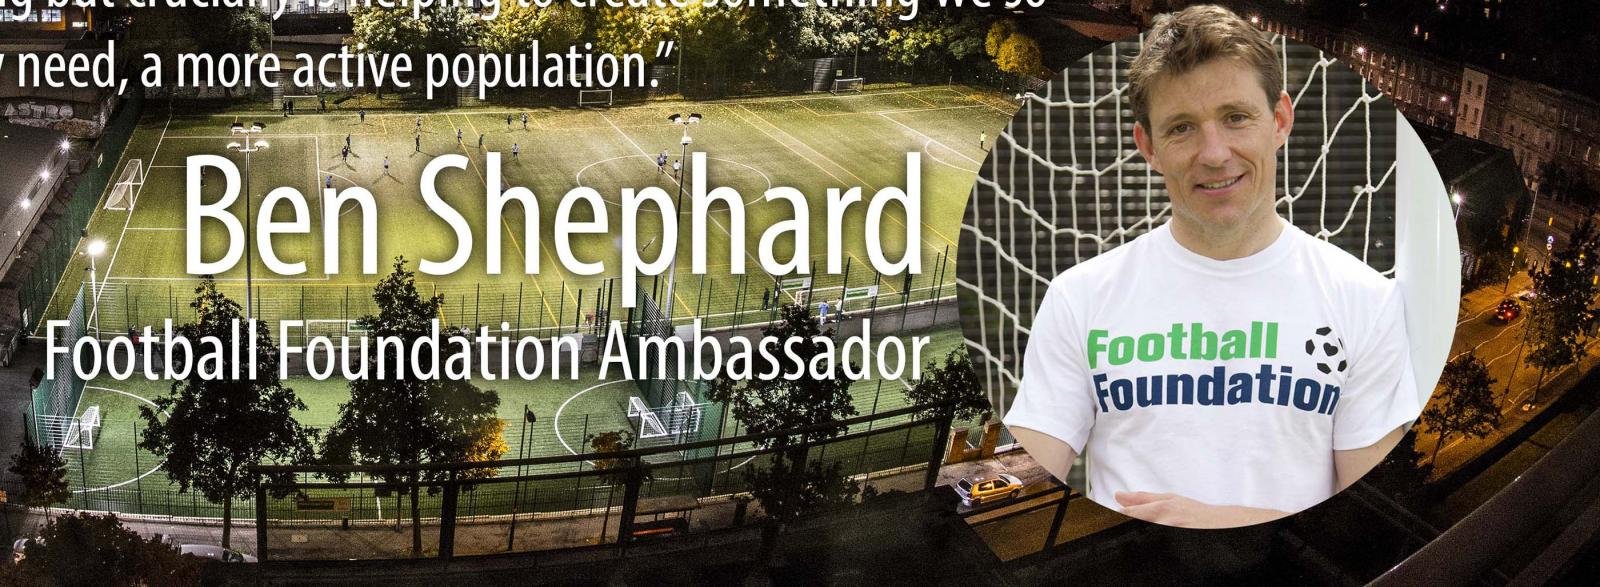 Football Foundation Monthly: TV presenter Ben Shephard praises facilities